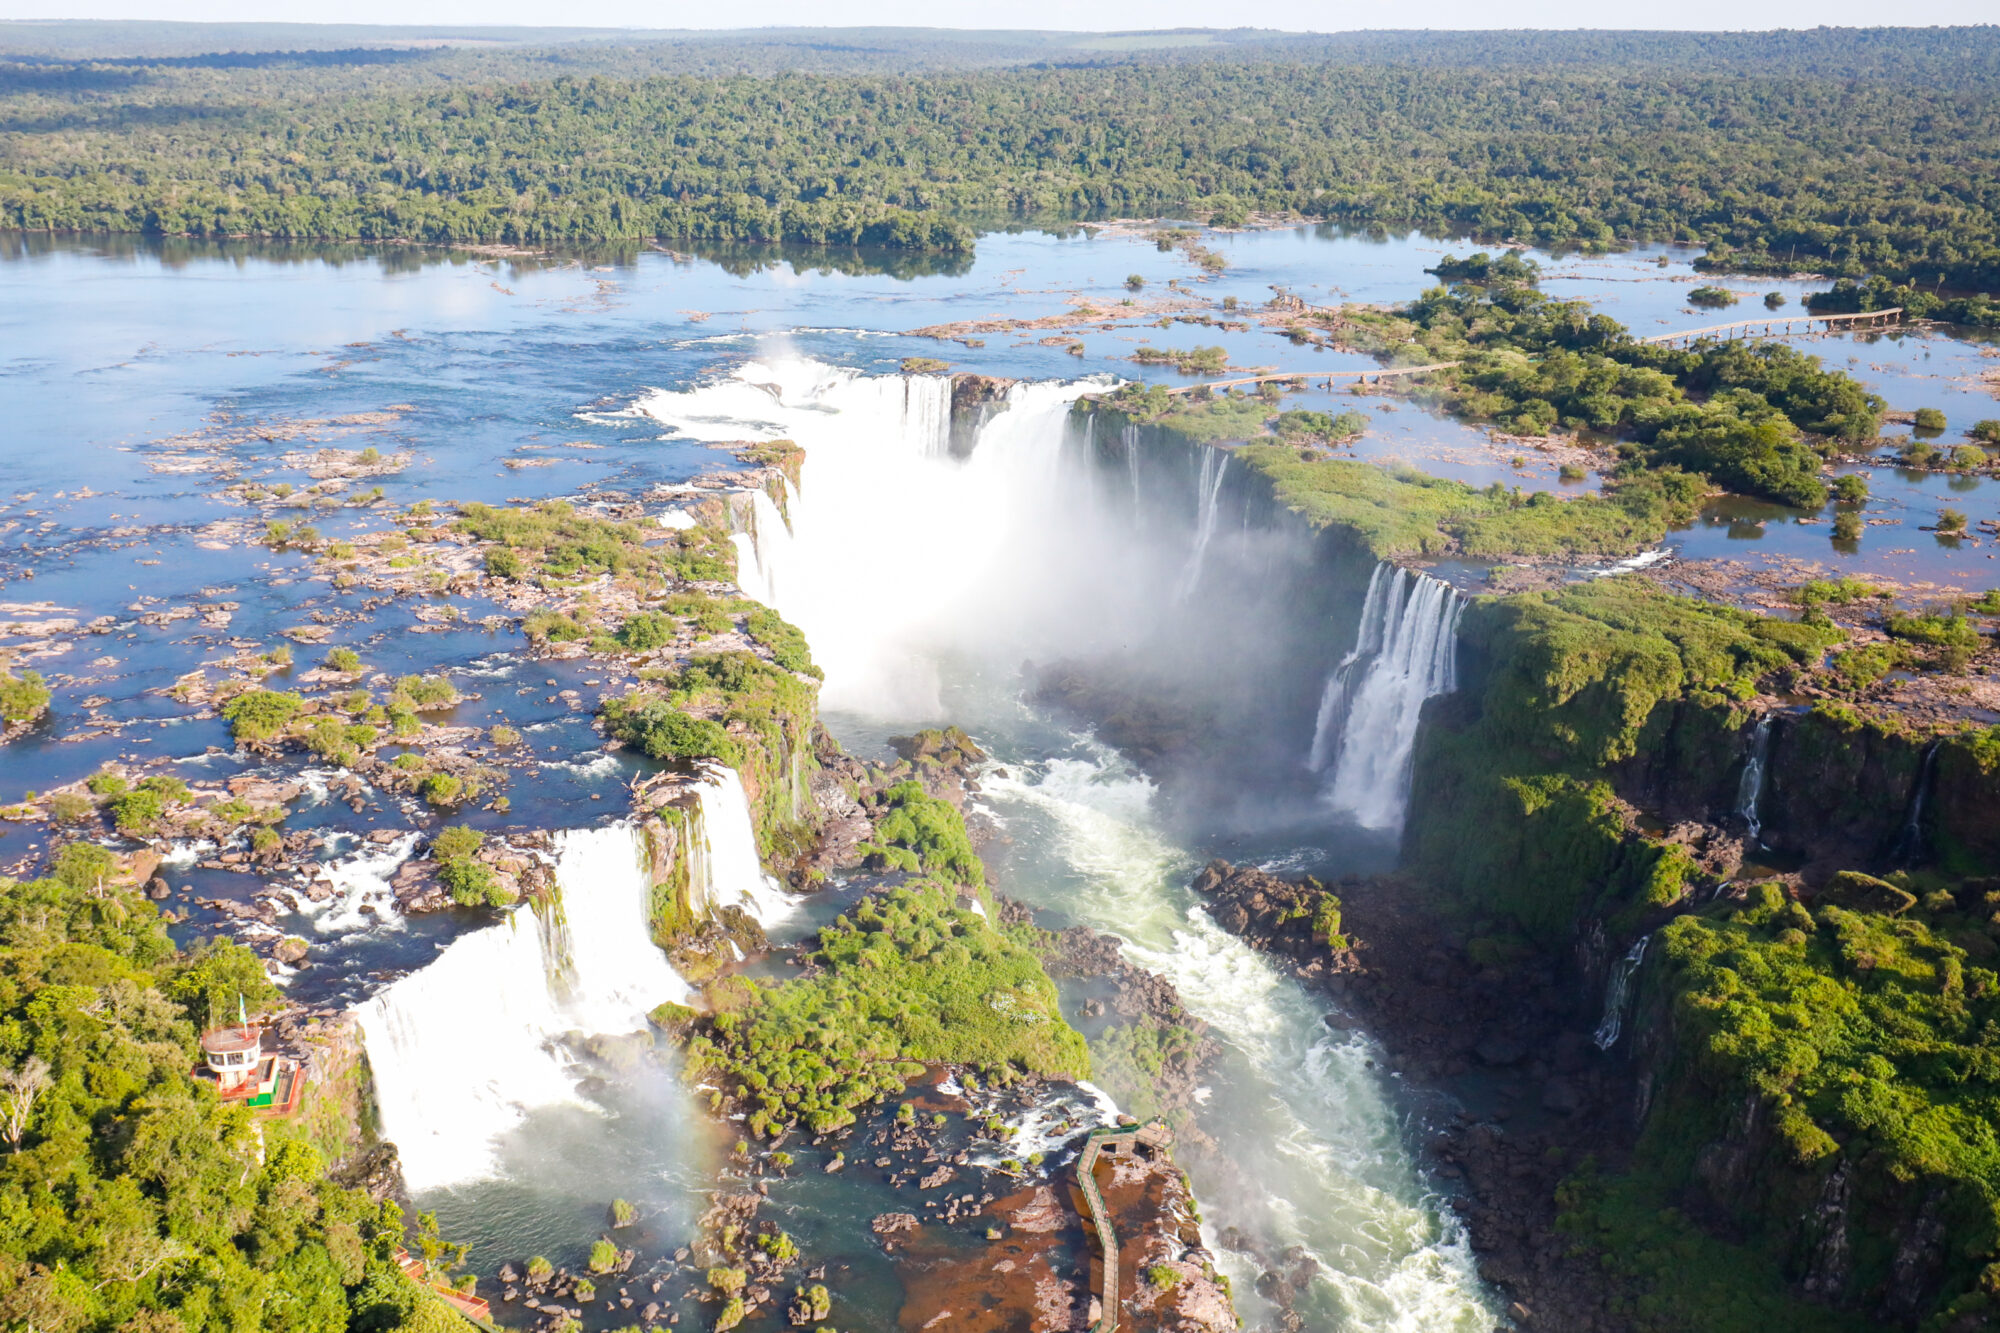 <p>Cataratas do Iguaçu, na divisa do Brasil com a Argentina. Ambos países fazem fronteira com o Paraguai na junção dos rios Iguaçu e Paraná e agora unem esforços para coordenar recursos hídricos compartilhados (Imagem: <a href="https://www.flickr.com/photos/palaciodoplanalto/51101909873/in/photolist-2kRGDrB-2kRM5dj-2n51EuC-2kRM5g5-2kRFpuJ-2kRFpz8-2n4VgLq-2kRFaBw-2kRM5hN-2n52YYa-2kRFUBh-2n51Hdi-2kRFUx4-2n51GP2-2kRM5ij-2n54yAe-2kRGDyW-2n51Fkk-2n51FDg-2onstxV-2n52WLz-2onxkfW-2n52XED-2n54z5f-2onstBs-2n52YLB-2n4VgBs-2kRFUzU-2kRFpws-2kRDNtd-2kRJwzU-2kRF5Us-2kREdRe-2kREKMQ-2kRG1x1-2n52Z69-2n52YxW-2kREdPA-2kREdM6-2ifsoUo-2kRLKEs-2kRLr8n-2kREL53-2kREL2s-2kRG1bj-2kREiB9-2kREixm-2kREL4w-2kRDNwe-2kRJwwC/">Alan Santos</a> /<a href="https://www.flickr.com/people/palaciodoplanalto/">Palácio do Planalto</a>,<a href="https://creativecommons.org/licenses/by/2.0/"> CC BY</a>)</p>